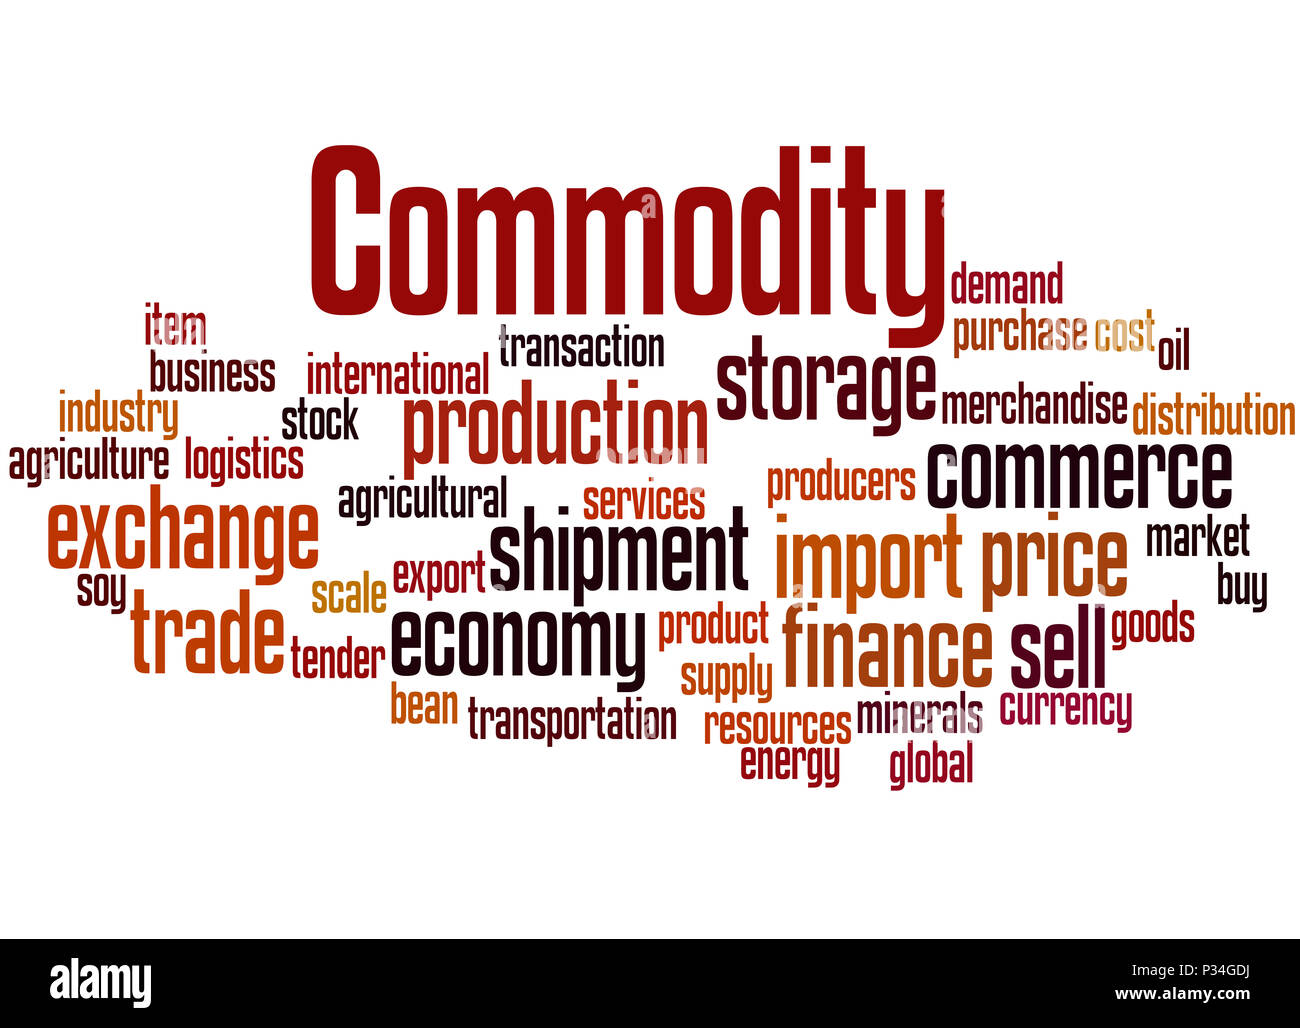 Money supply word cloud concept Stock Photo - Alamy